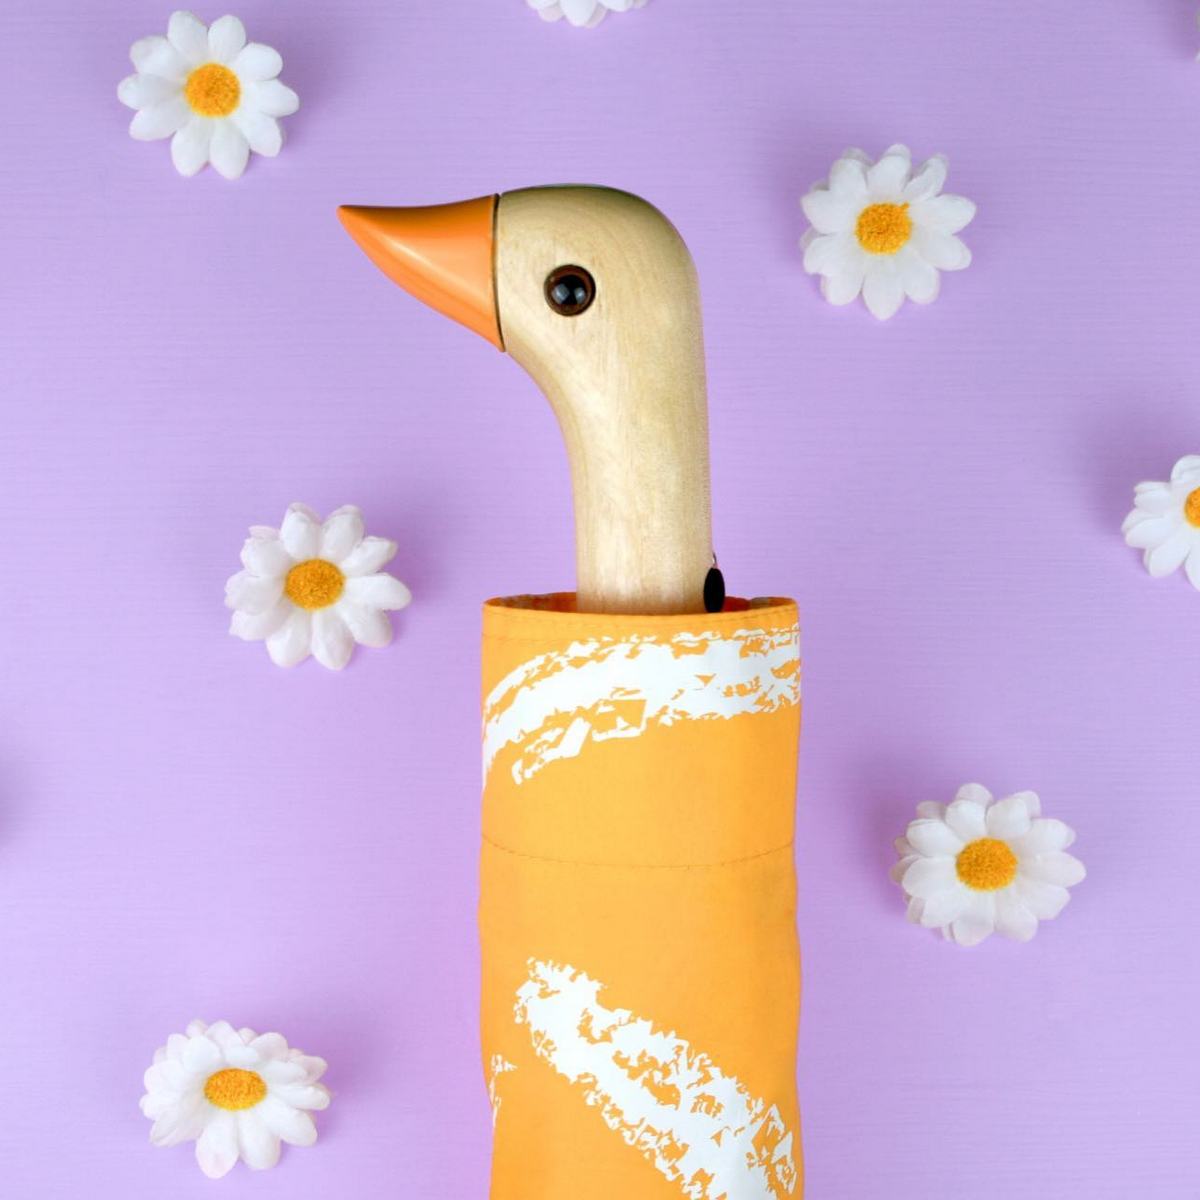 original duckhead parapluie jaune manche canard une idee cadeau chez ugo et lea  (5)